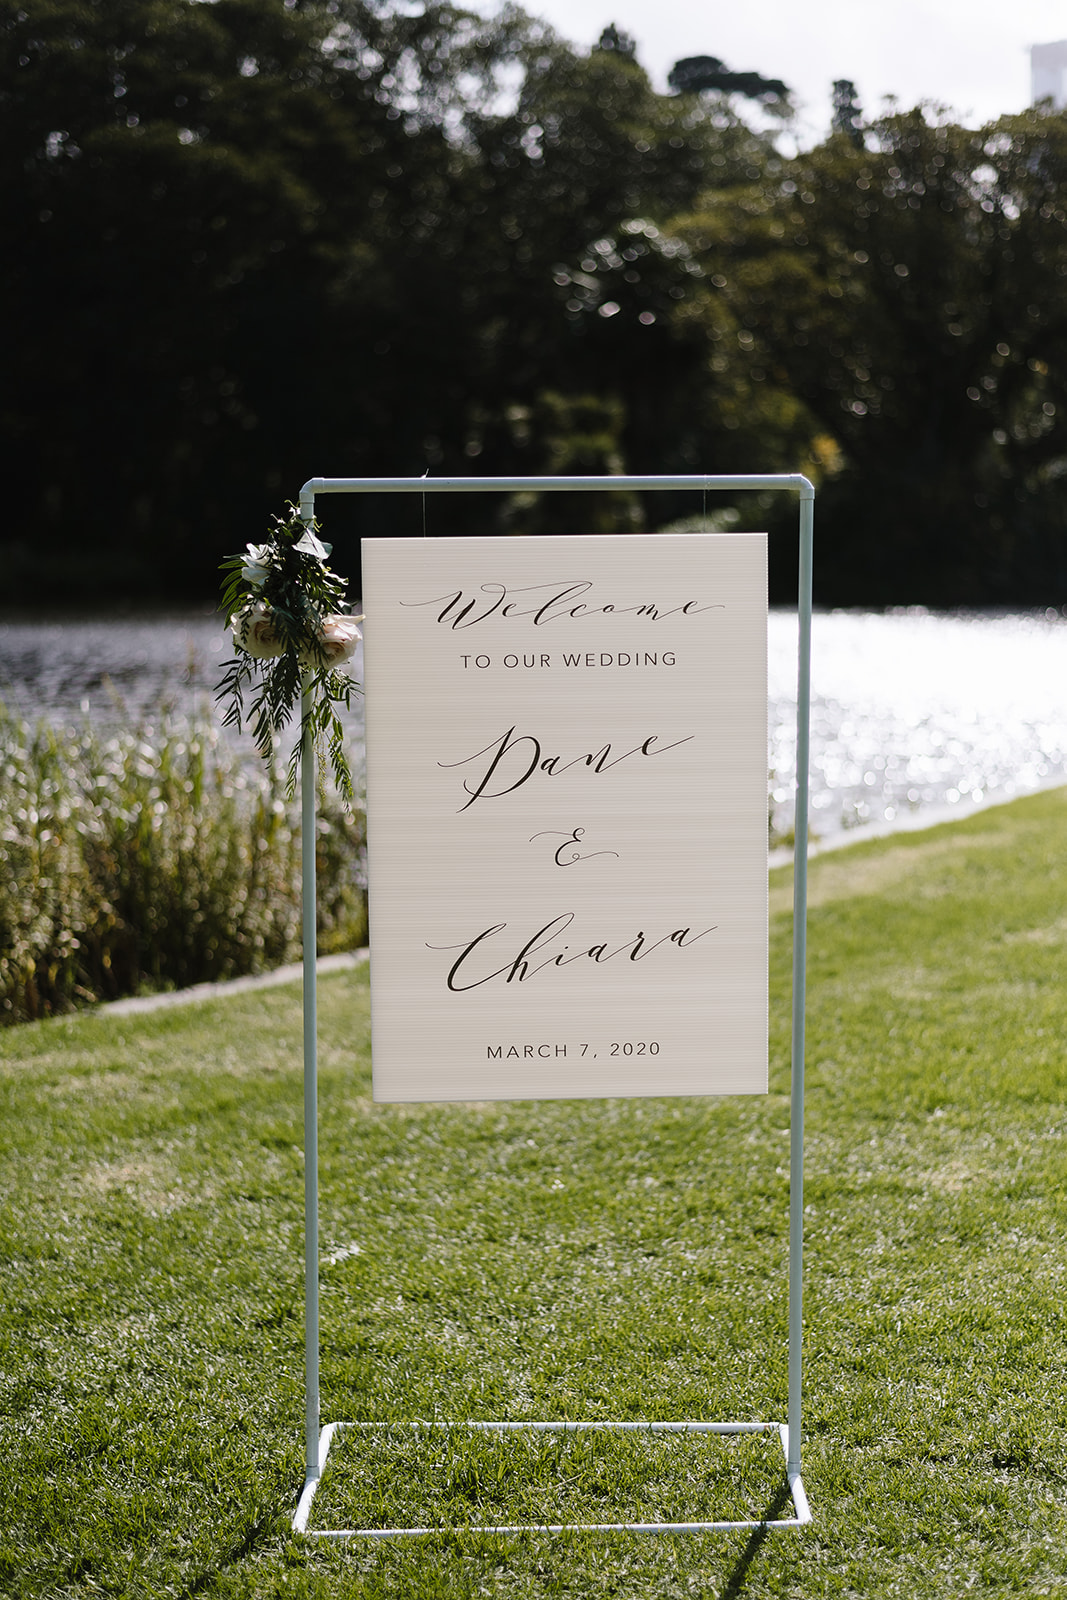 Signage at The Terrace Royal Botanic Gardens Melbourne wedding